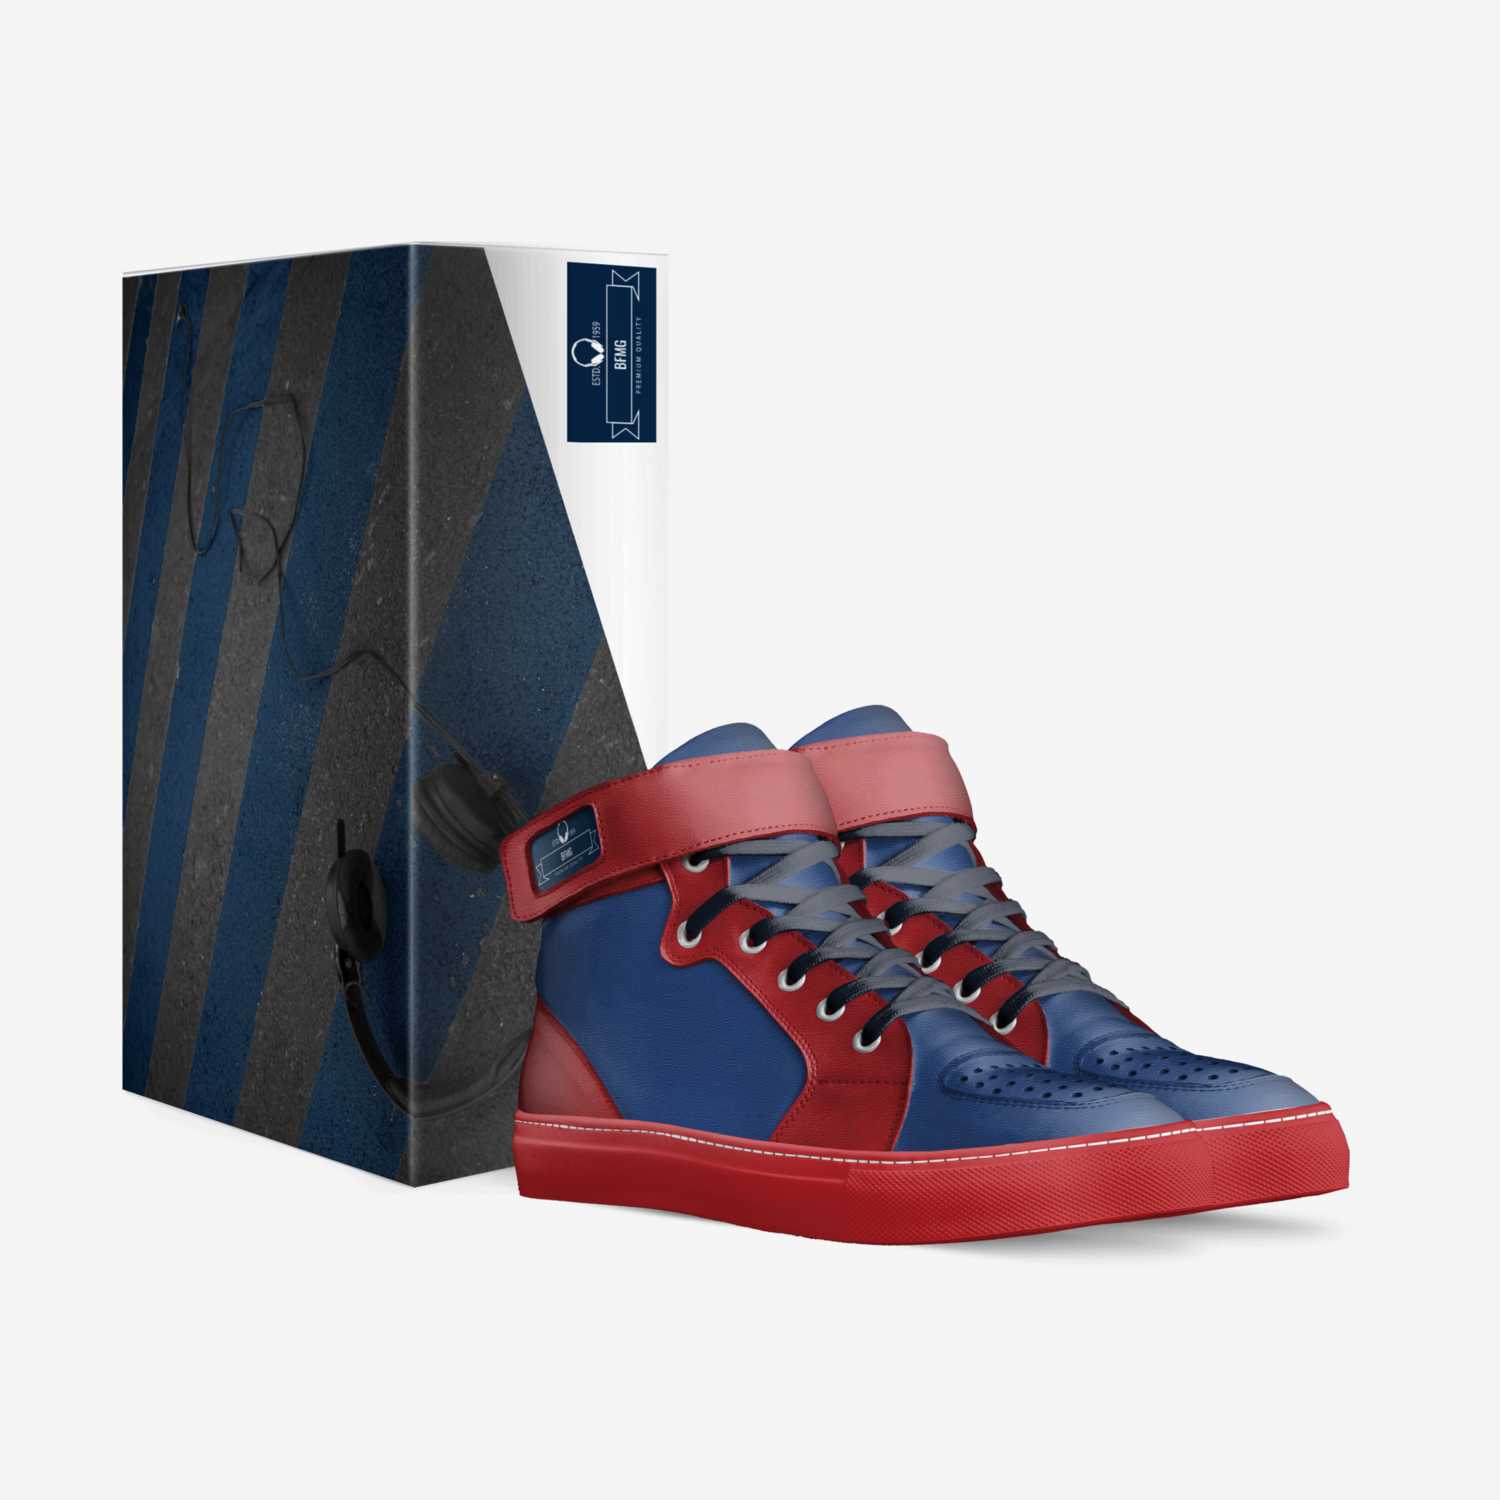 BFMG custom made in Italy shoes by Tanaya Smith | Box view